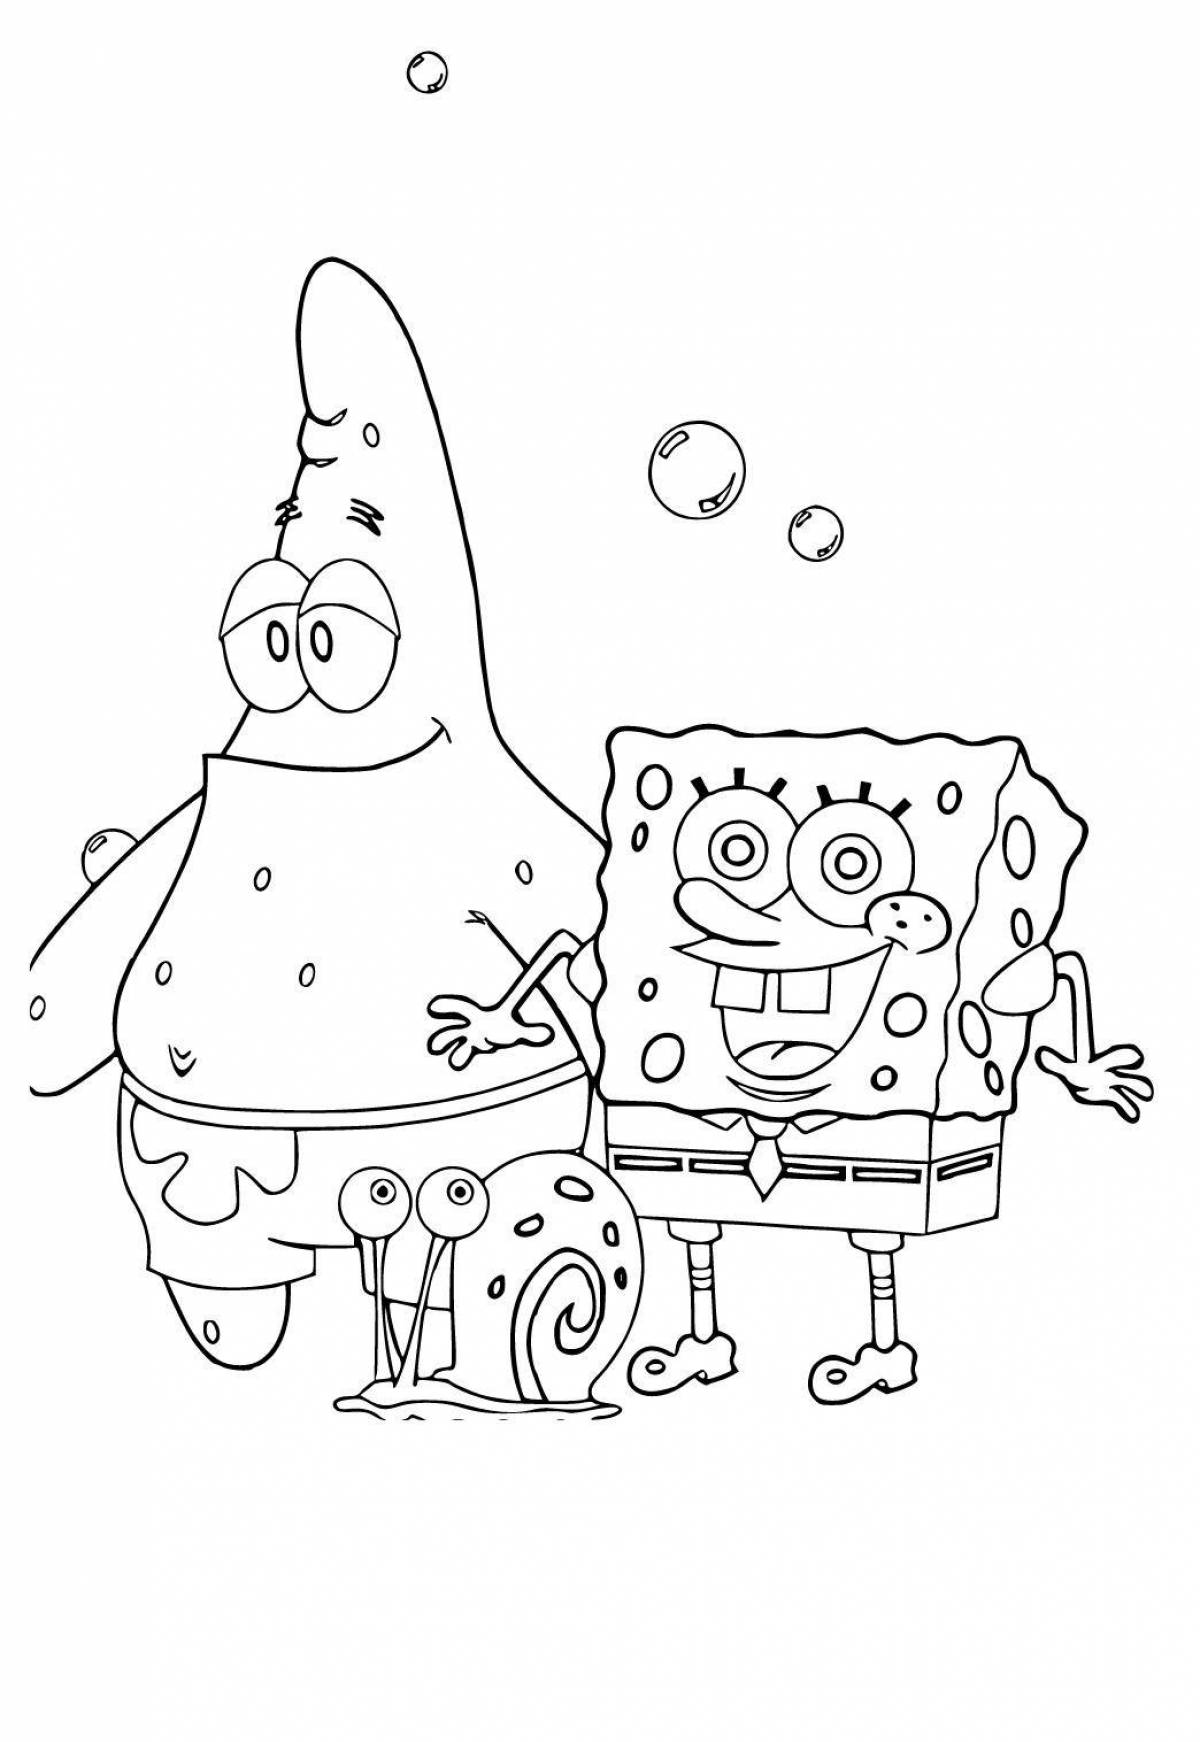 Spongebob and patrick amazing coloring book